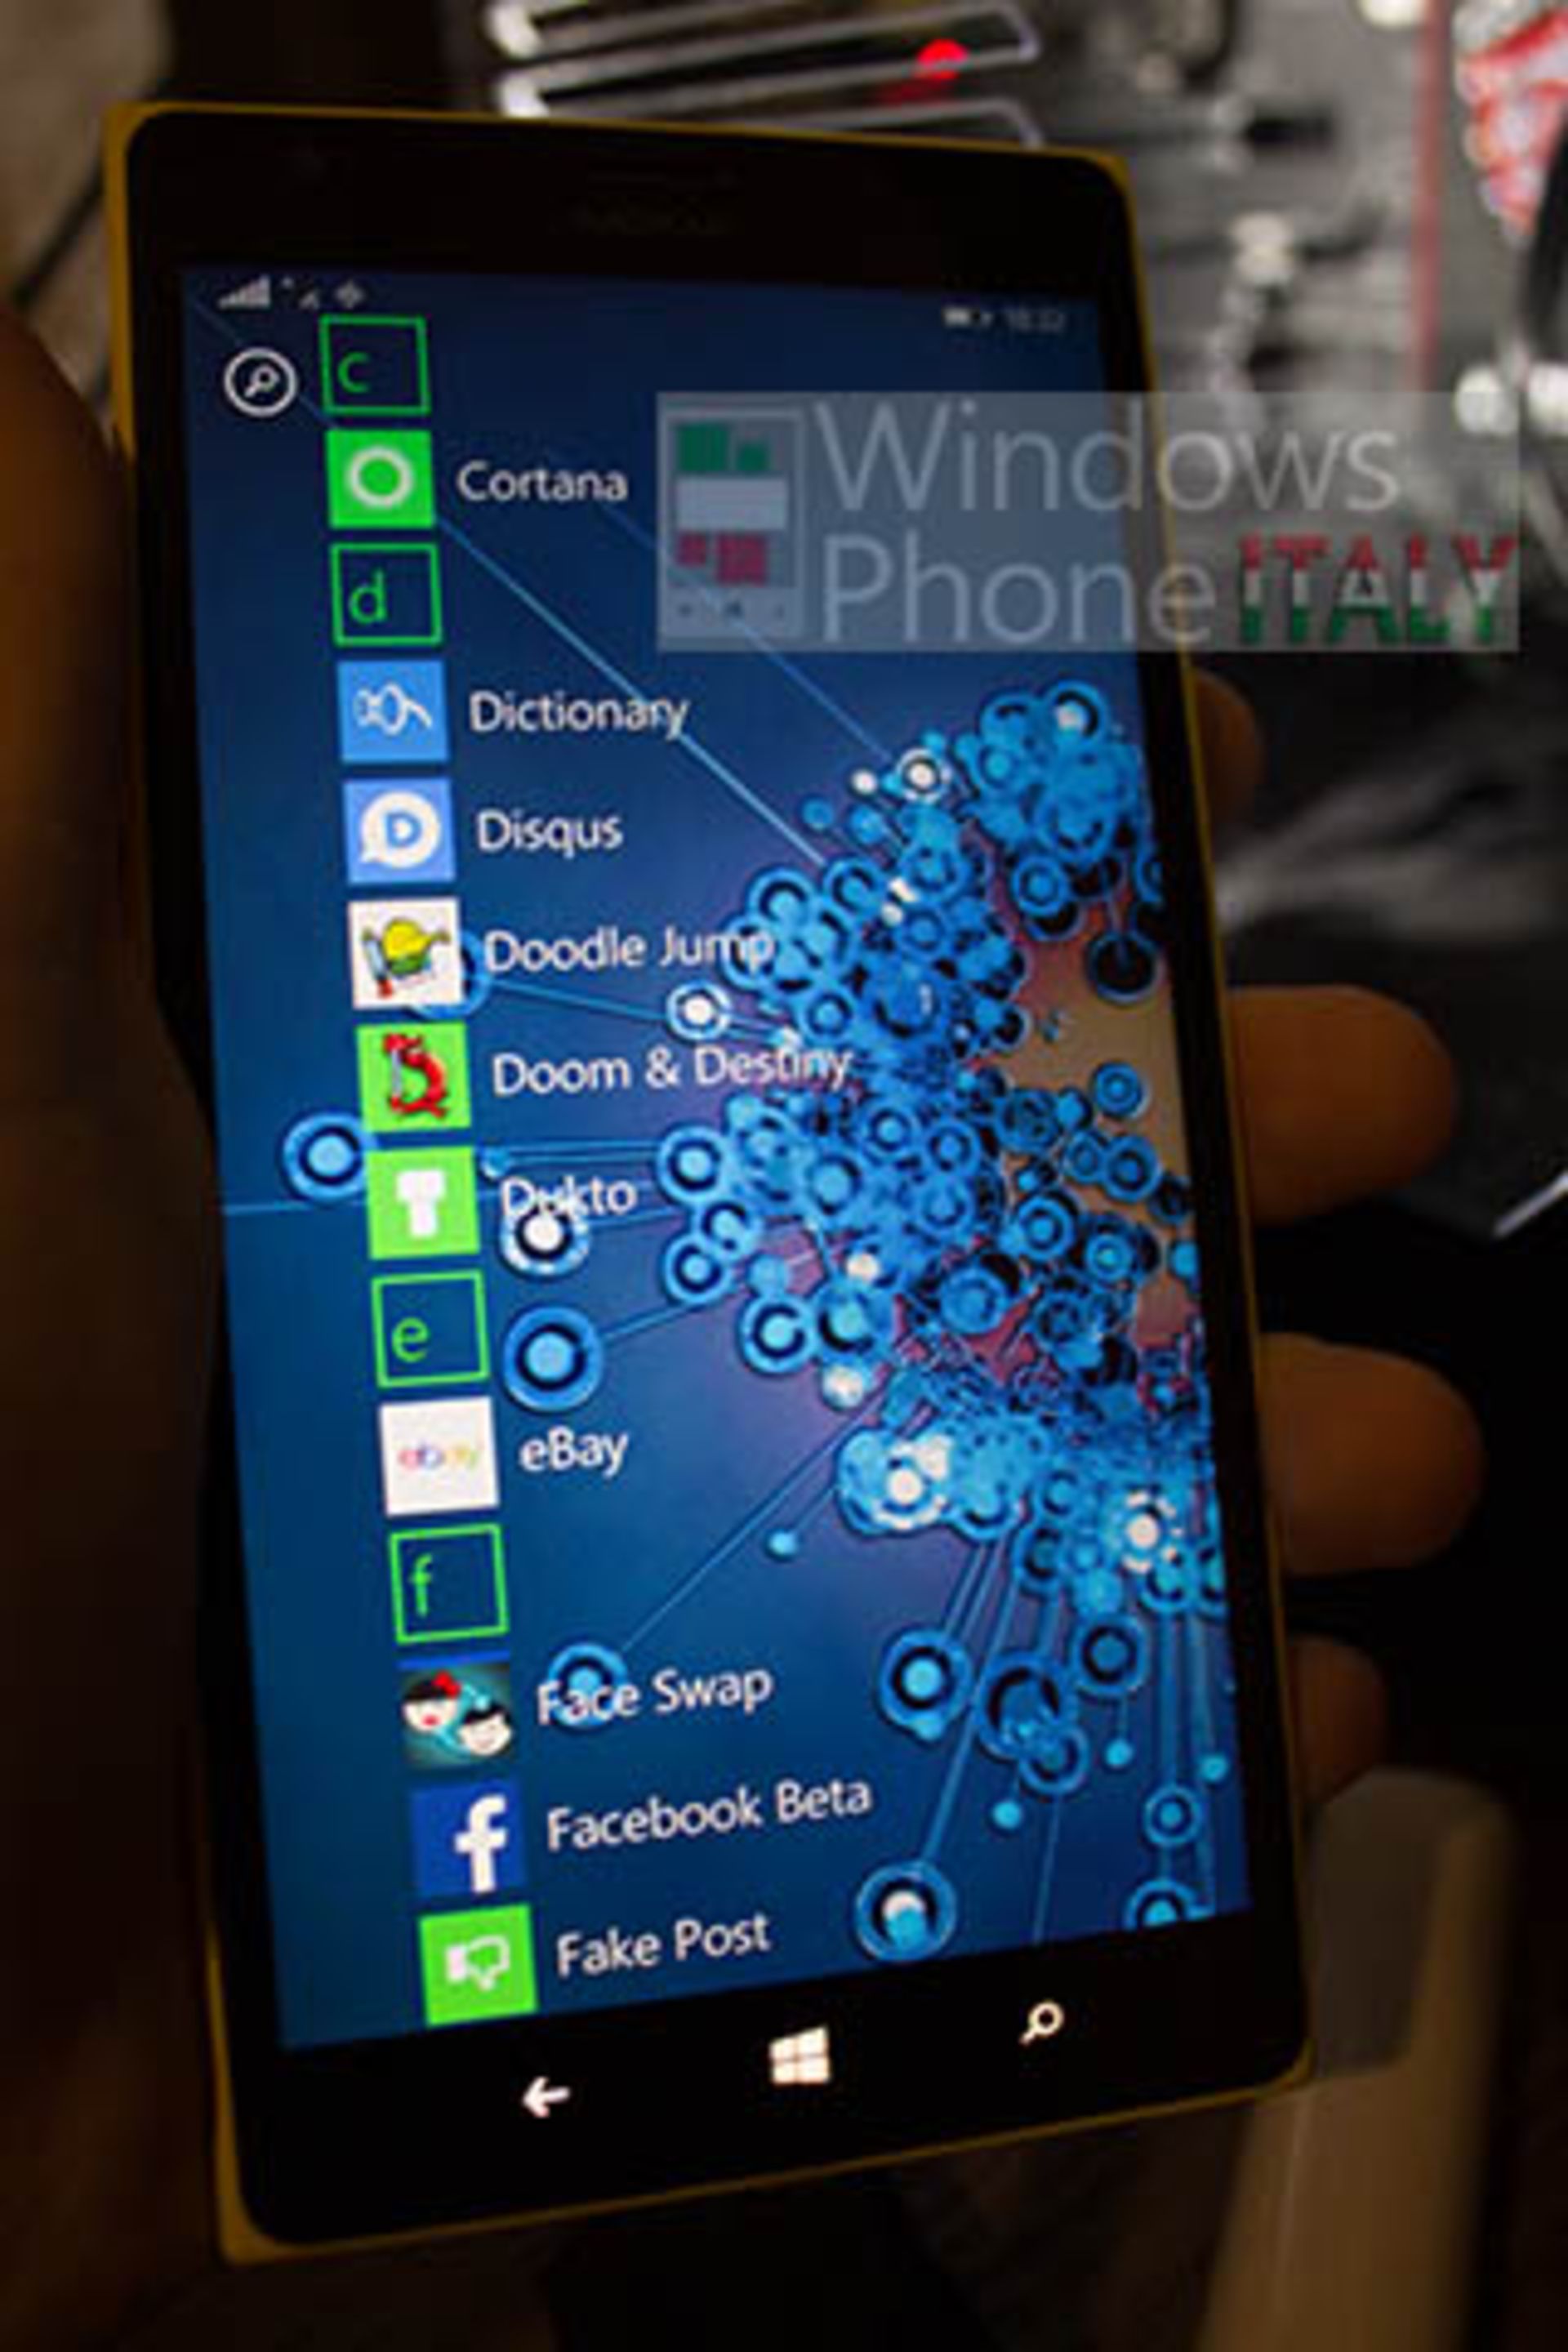 Alleged-shots-of-Windows-10-for-smartphones